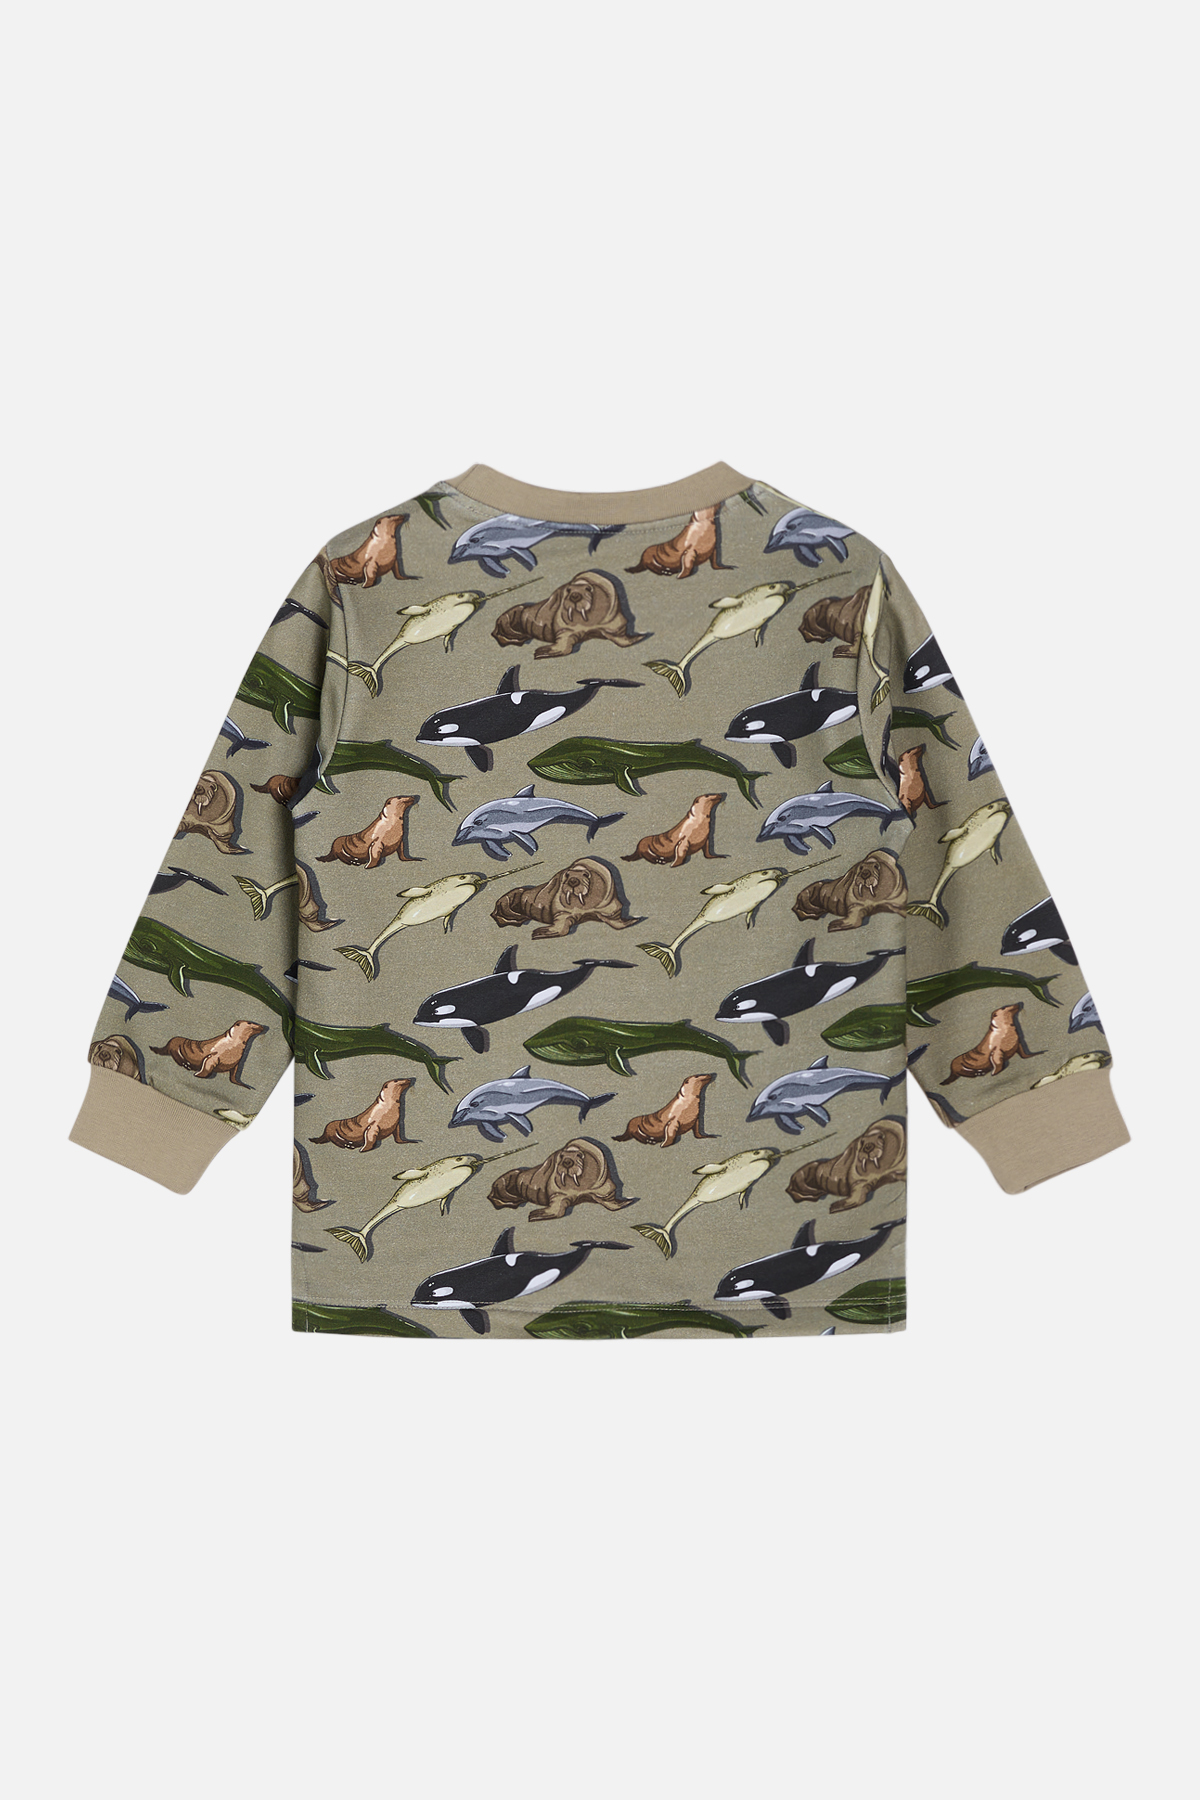 Hust&Claire khaki sweatshirt marine animals 'Samy'